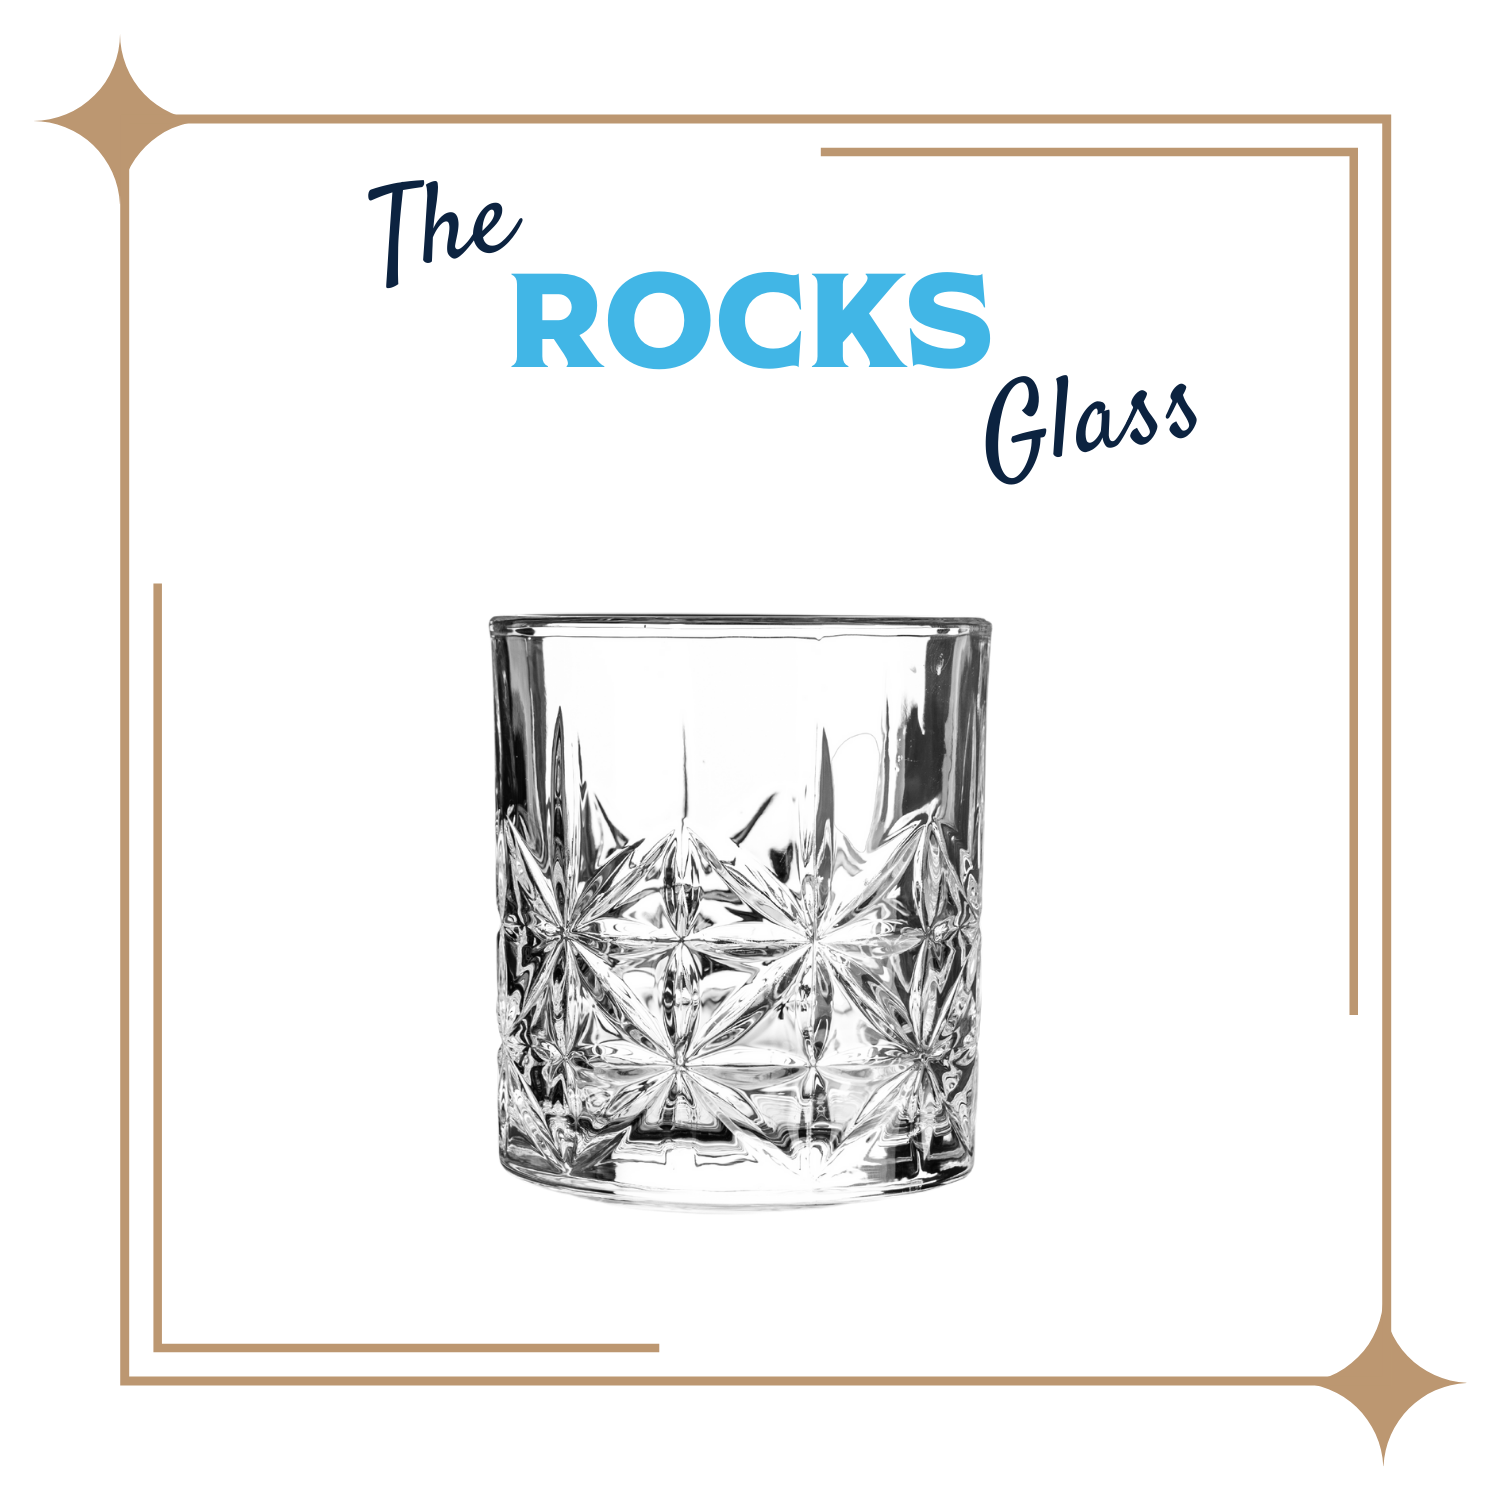 The Rocks Glass